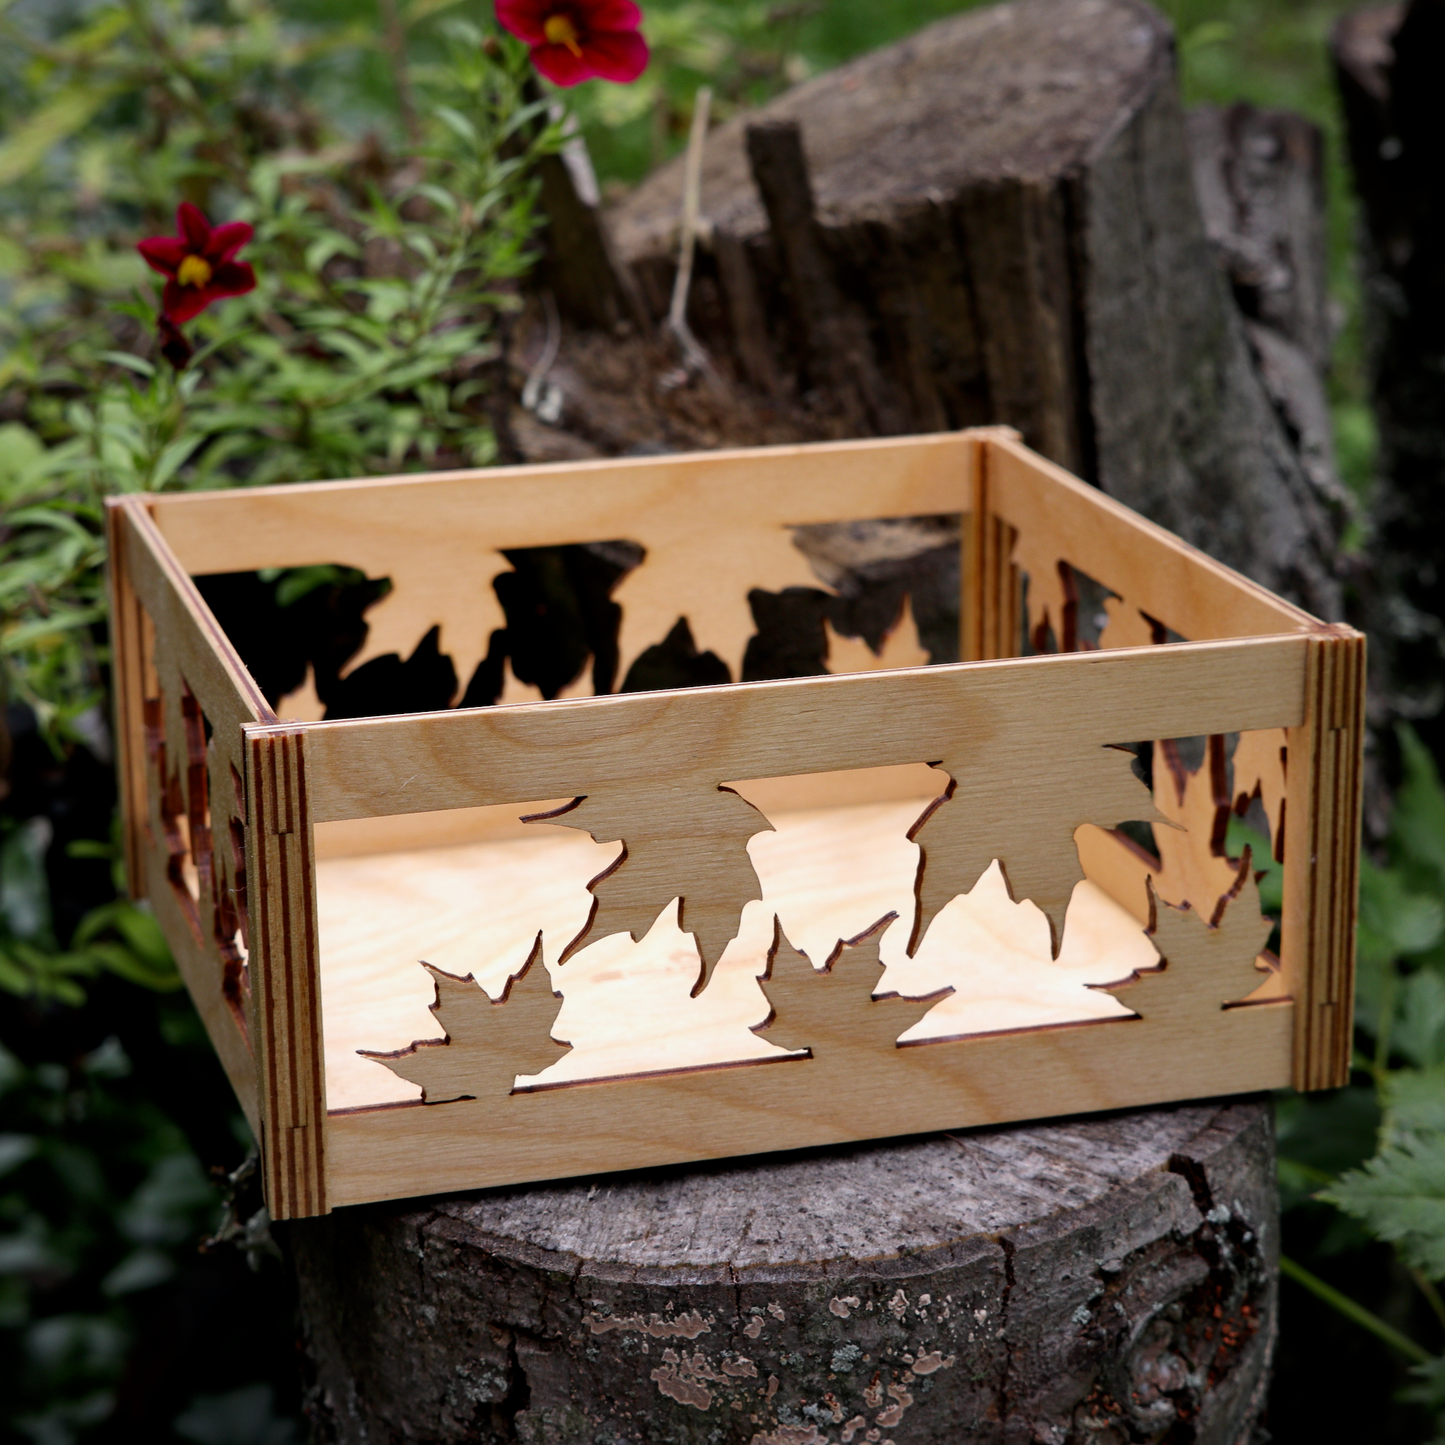 Maple Leaf box